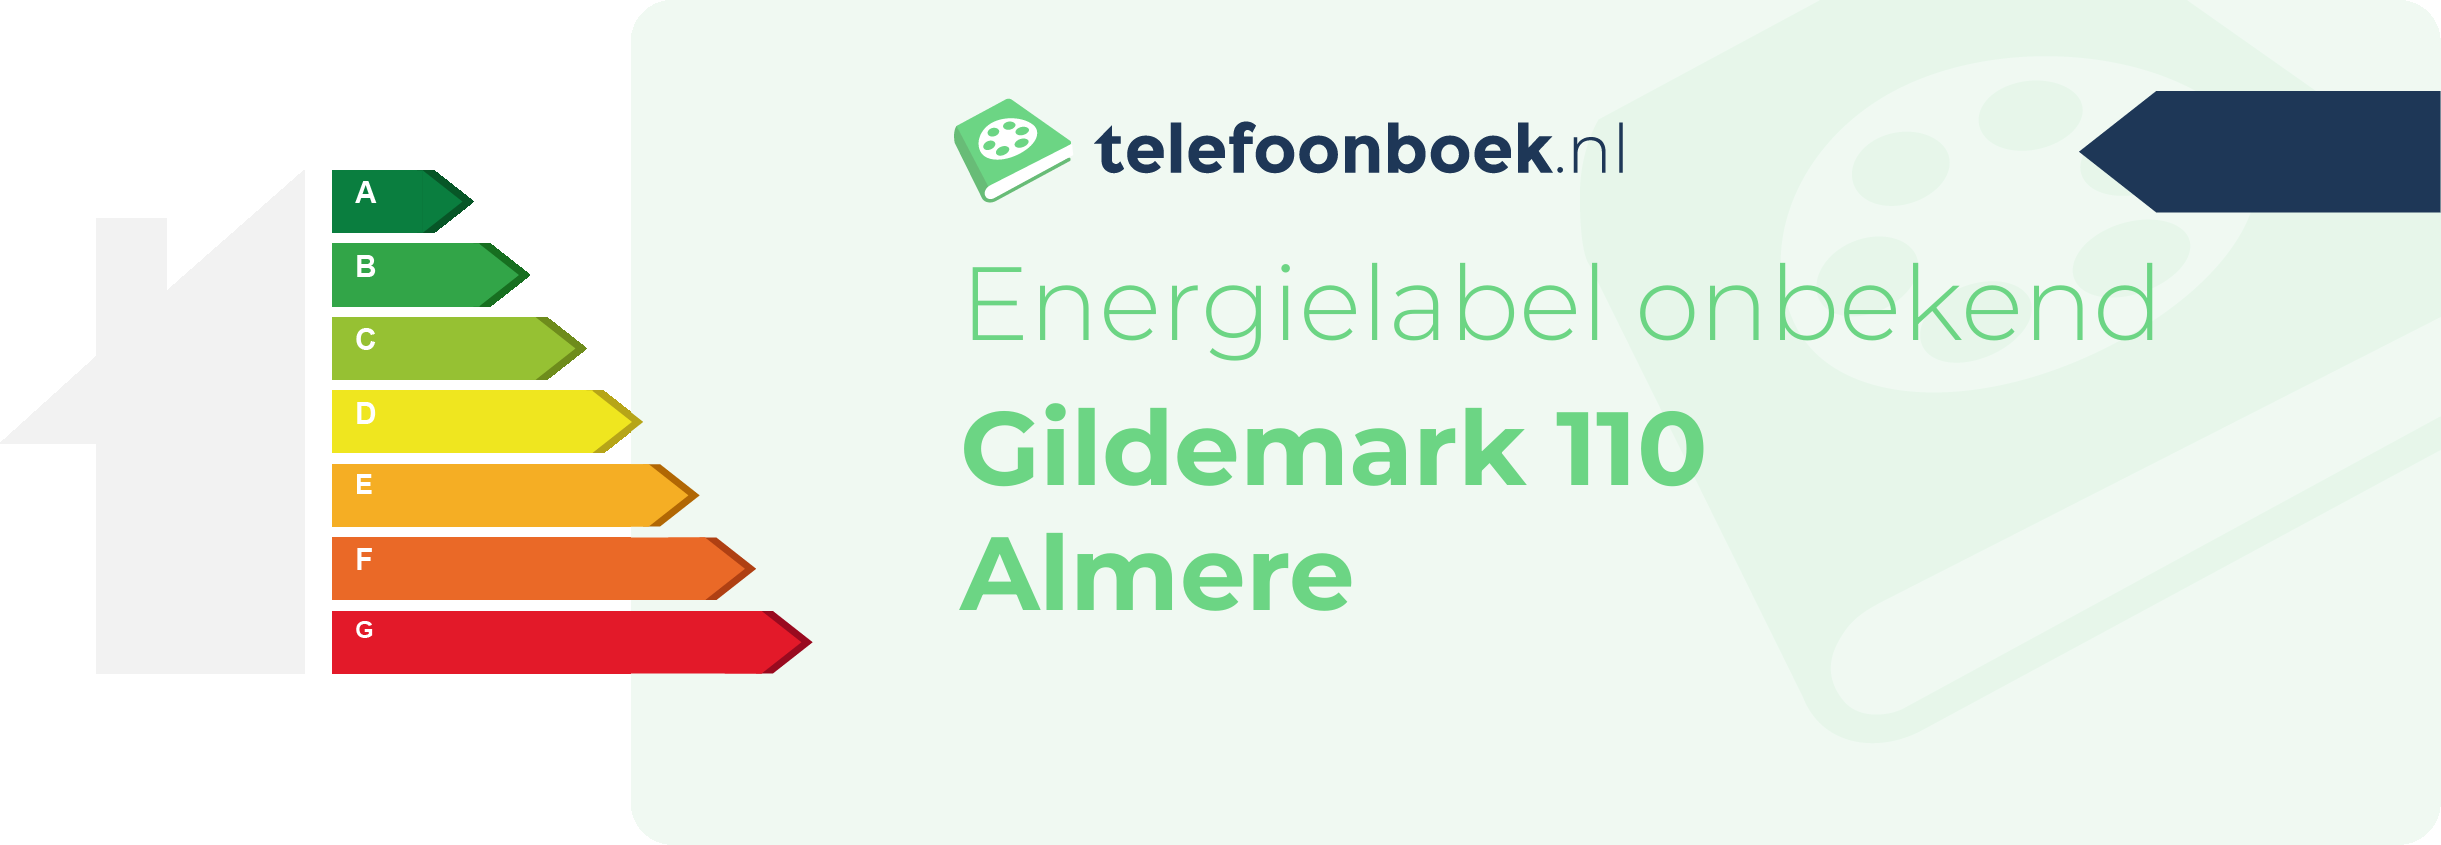 Energielabel Gildemark 110 Almere